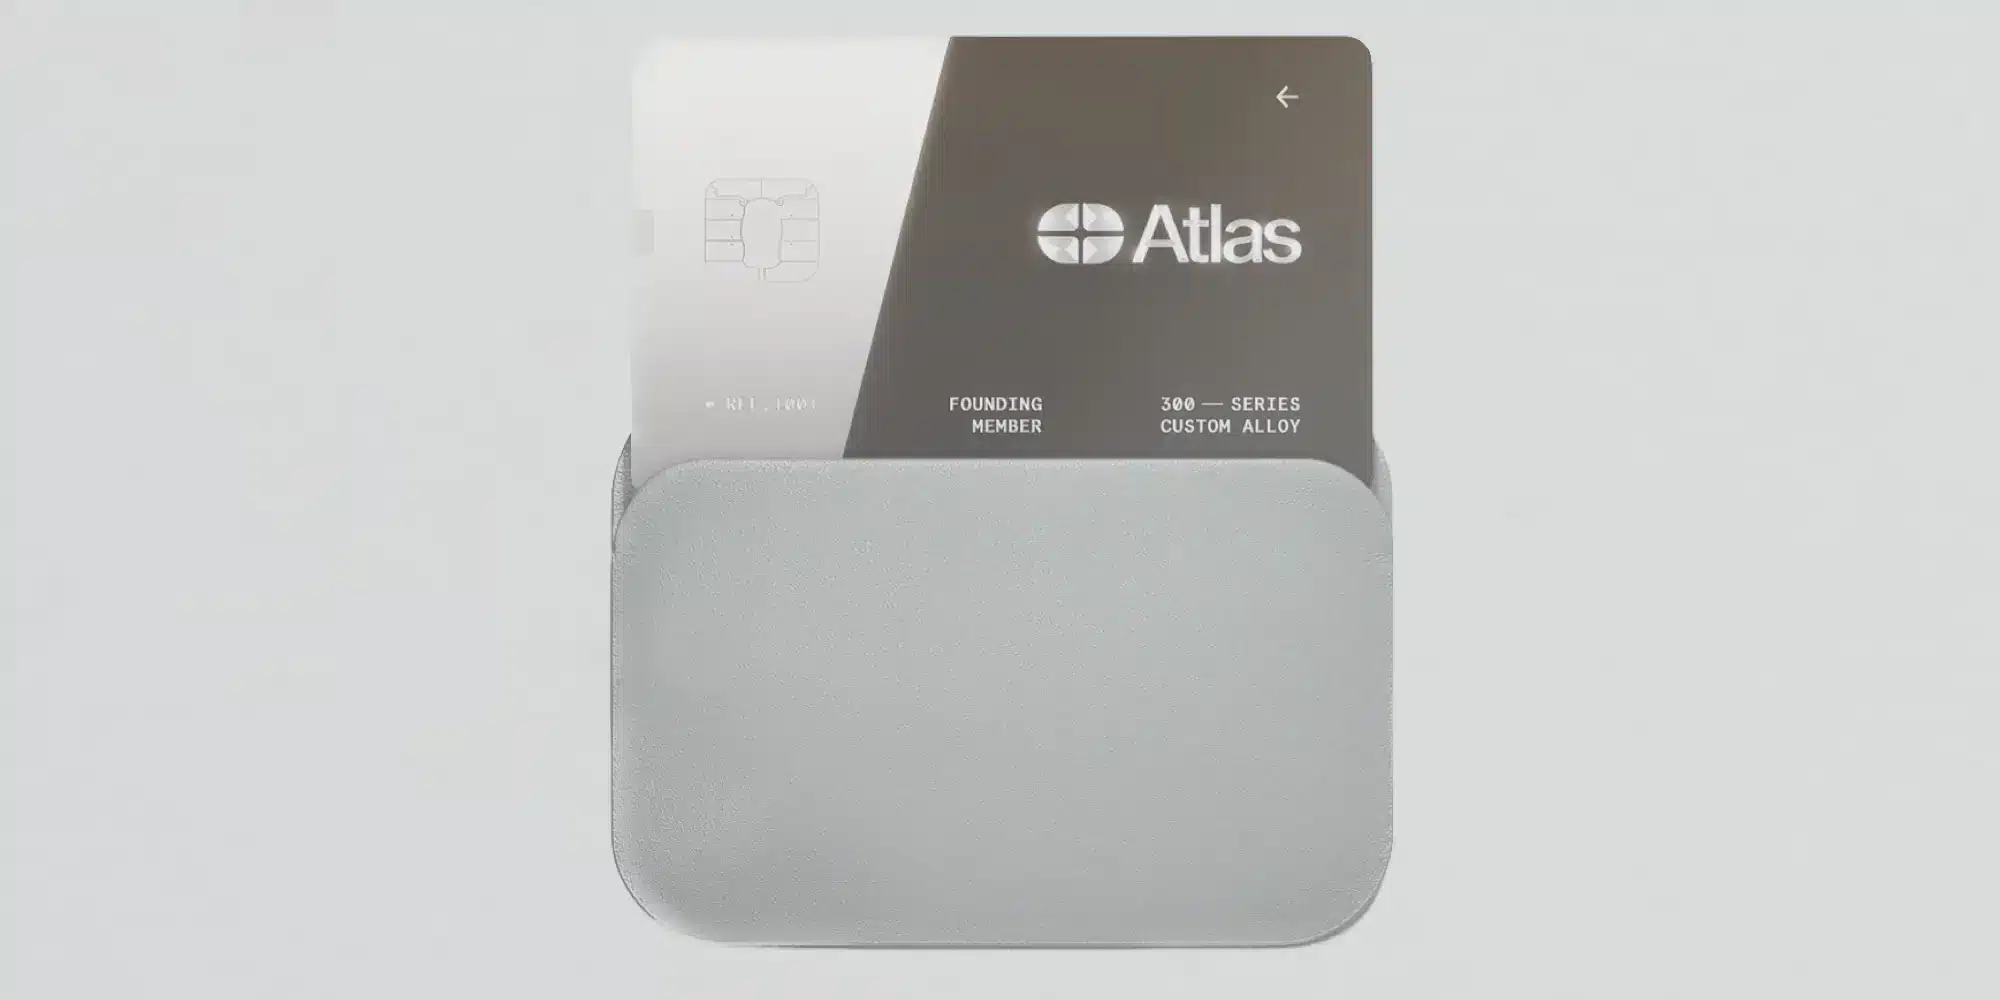 Atlas Card